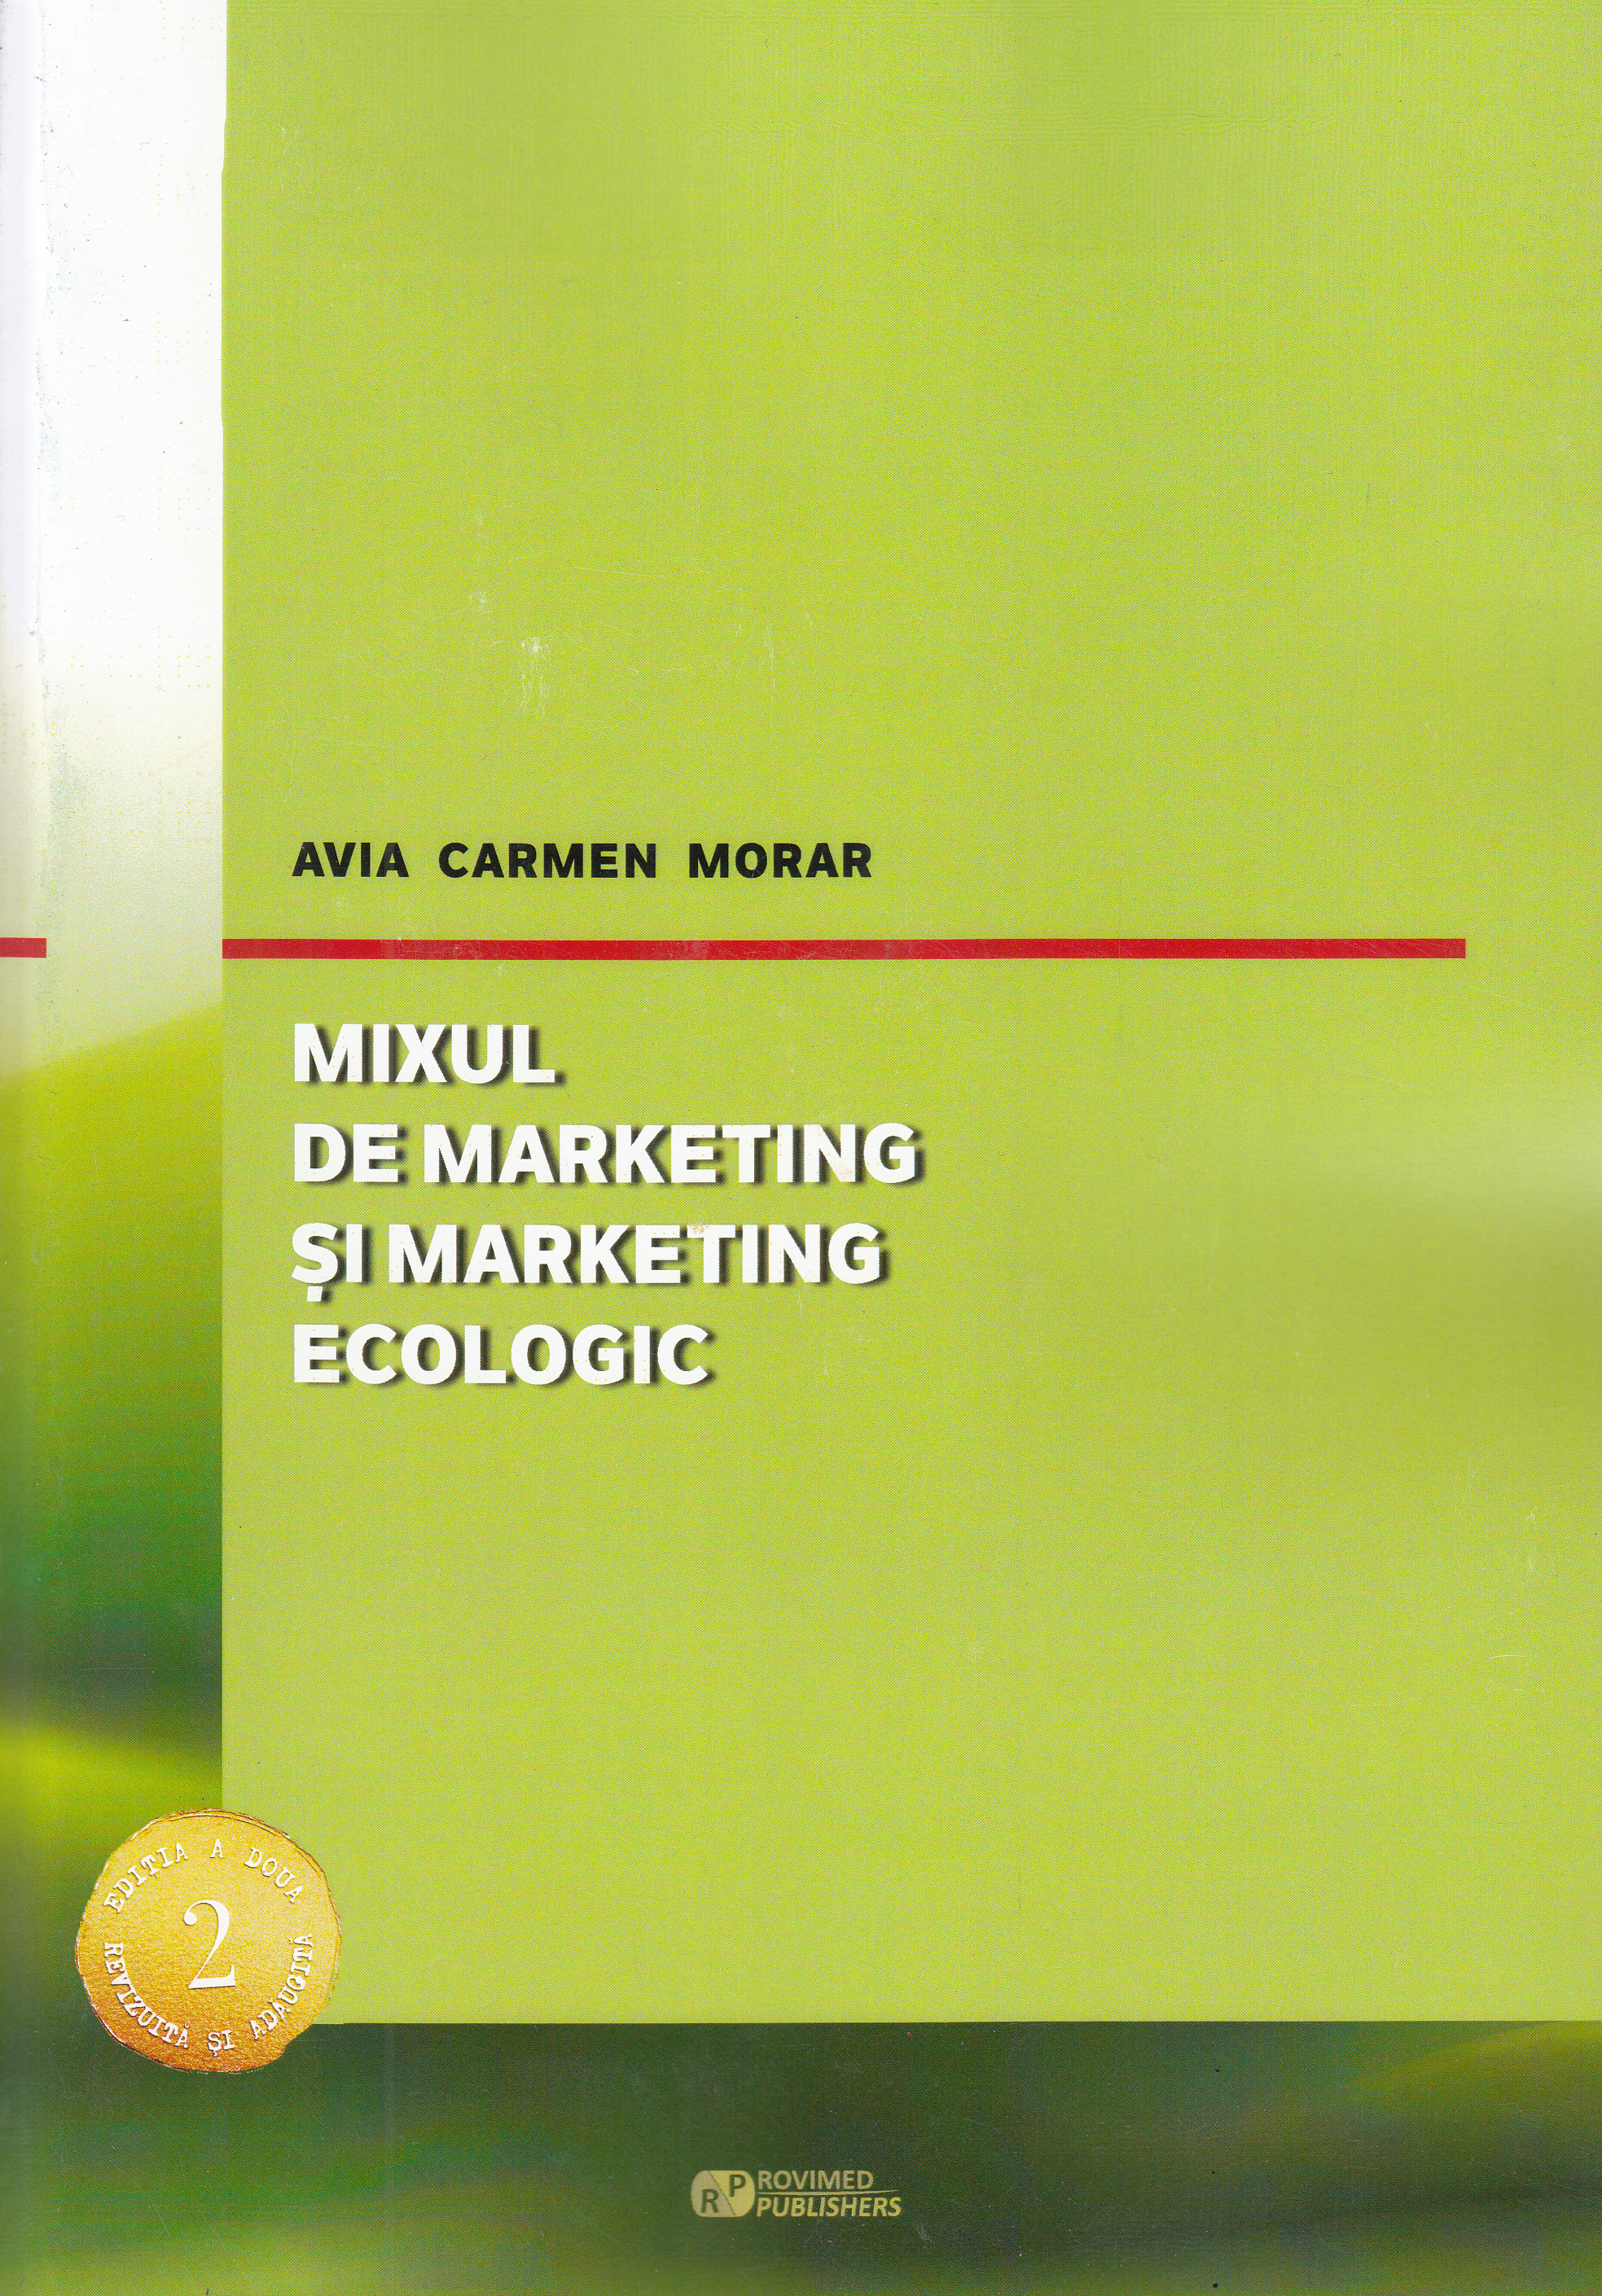 Mixul de marketing si marketing ecologic - Avia Carmen Morar